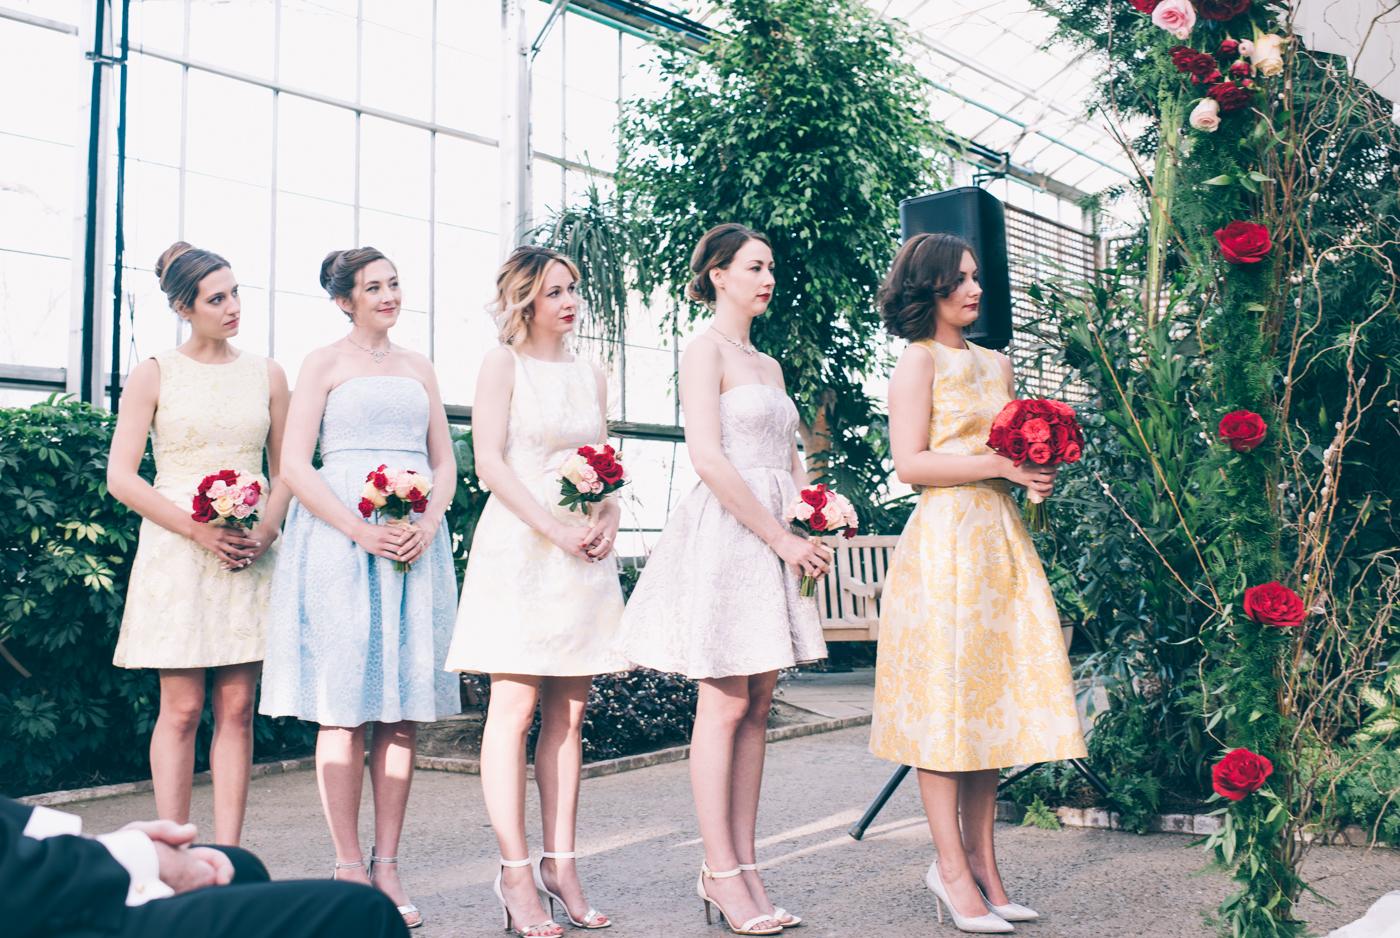 8 Swoon-Worthy Flower Wedding Arches Philly In Love Wedding Inspiration Philadelphia Weddings